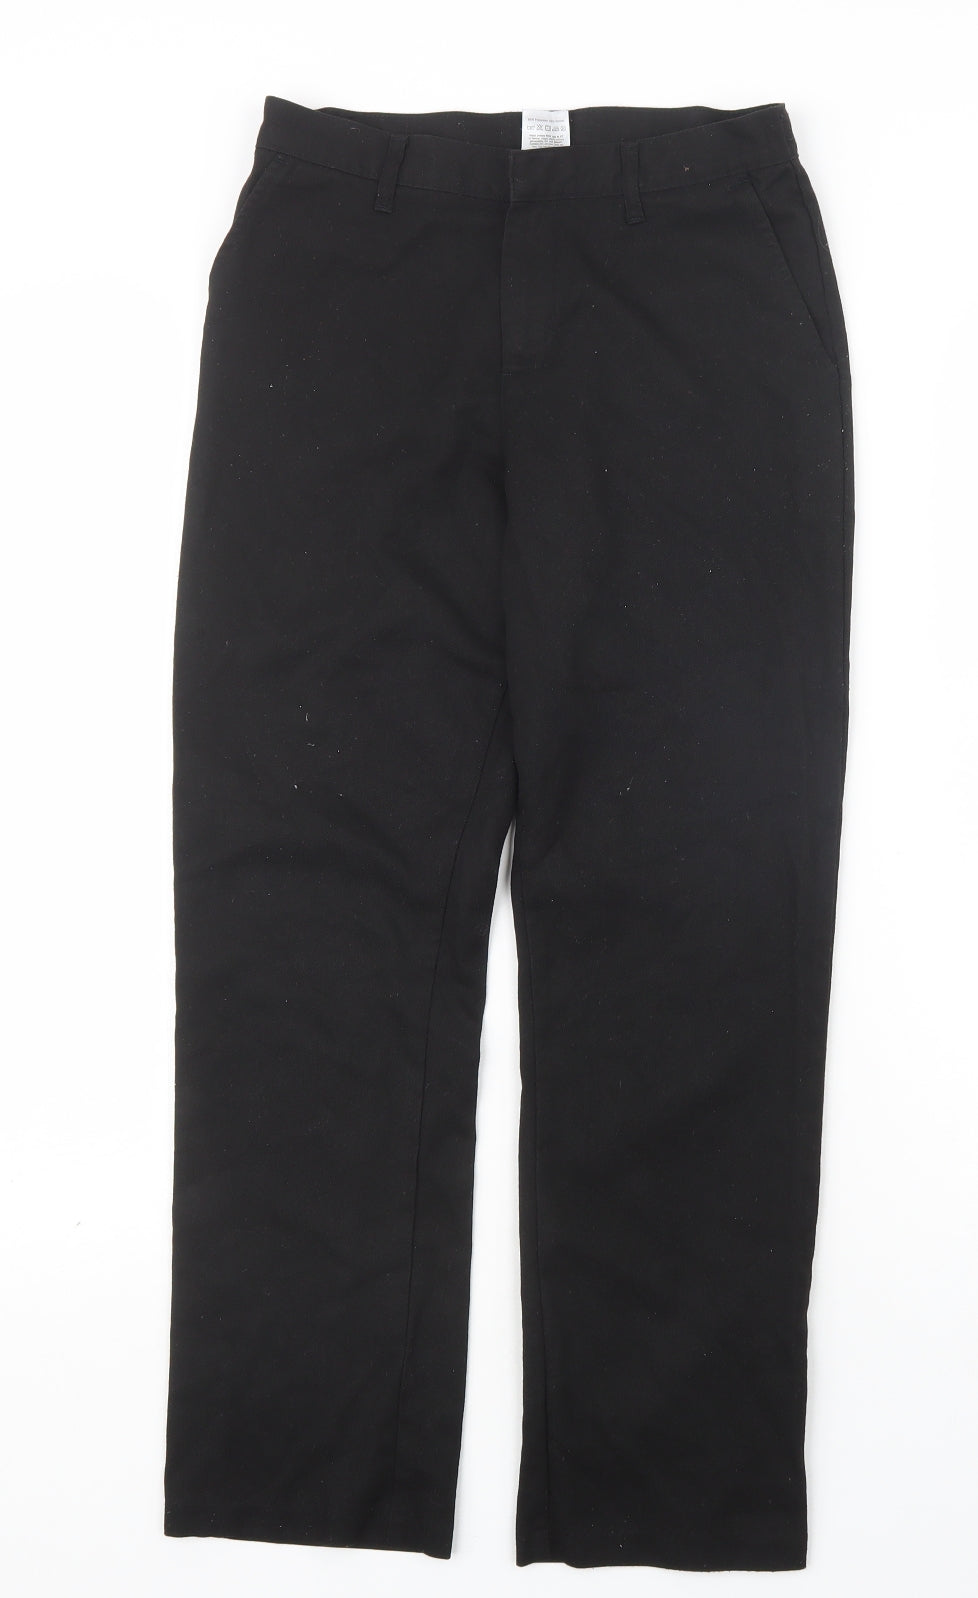 Preworn Boys Black  Polyester Capri Trousers Size 11-12 Years  Regular Zip